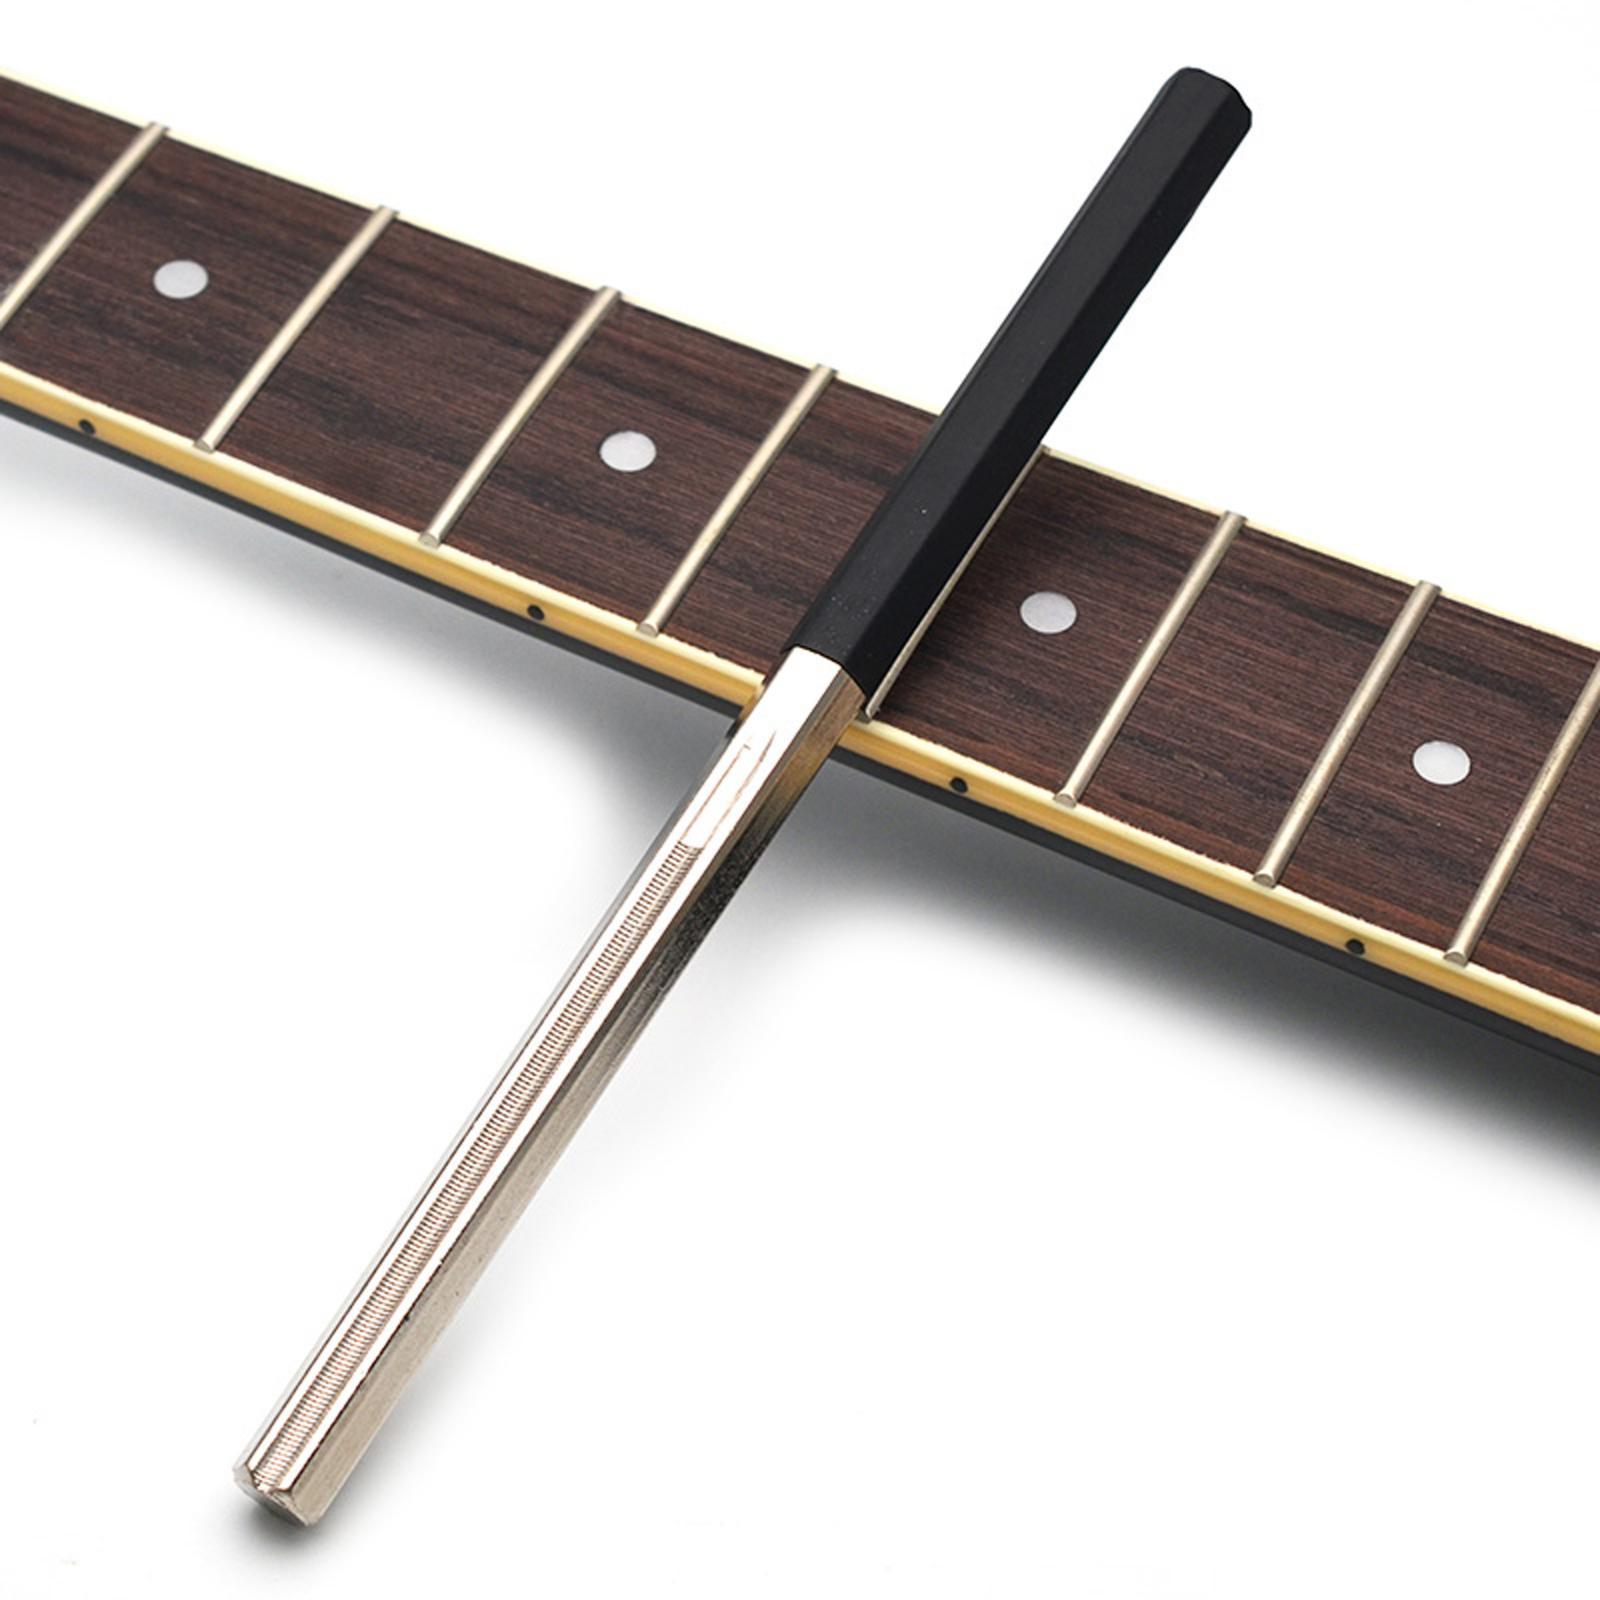 6pcs Guitar Tools Repair Maintenance Cleaning & Care Tool Kit for Ukulele Bass Mandolin Banjo Guitar String Instrument